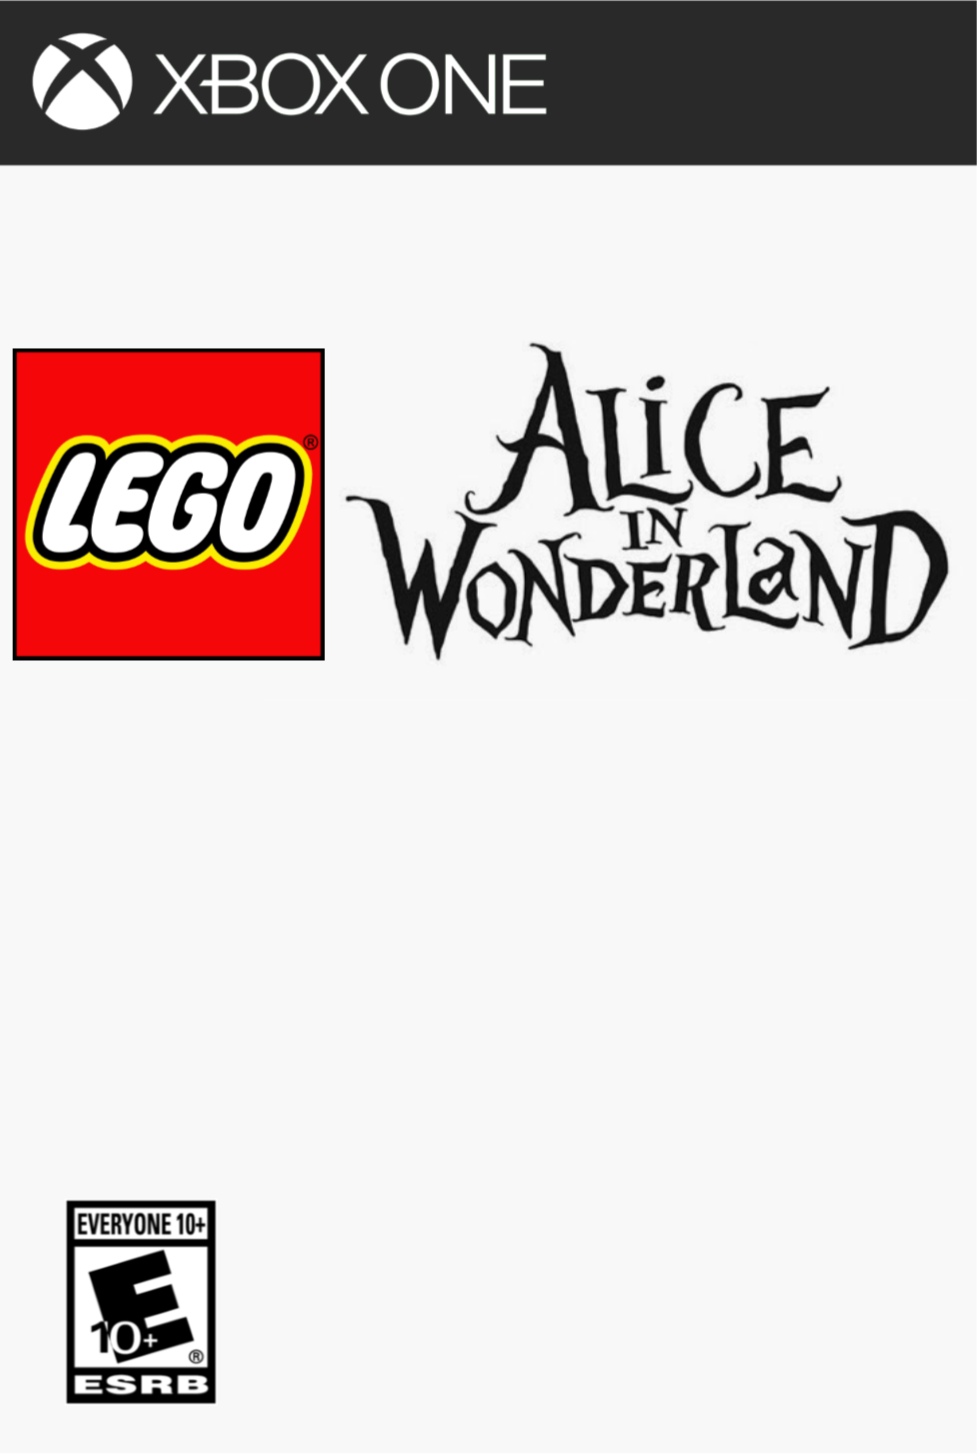 LEGO IDEAS - Alice in Wonderland